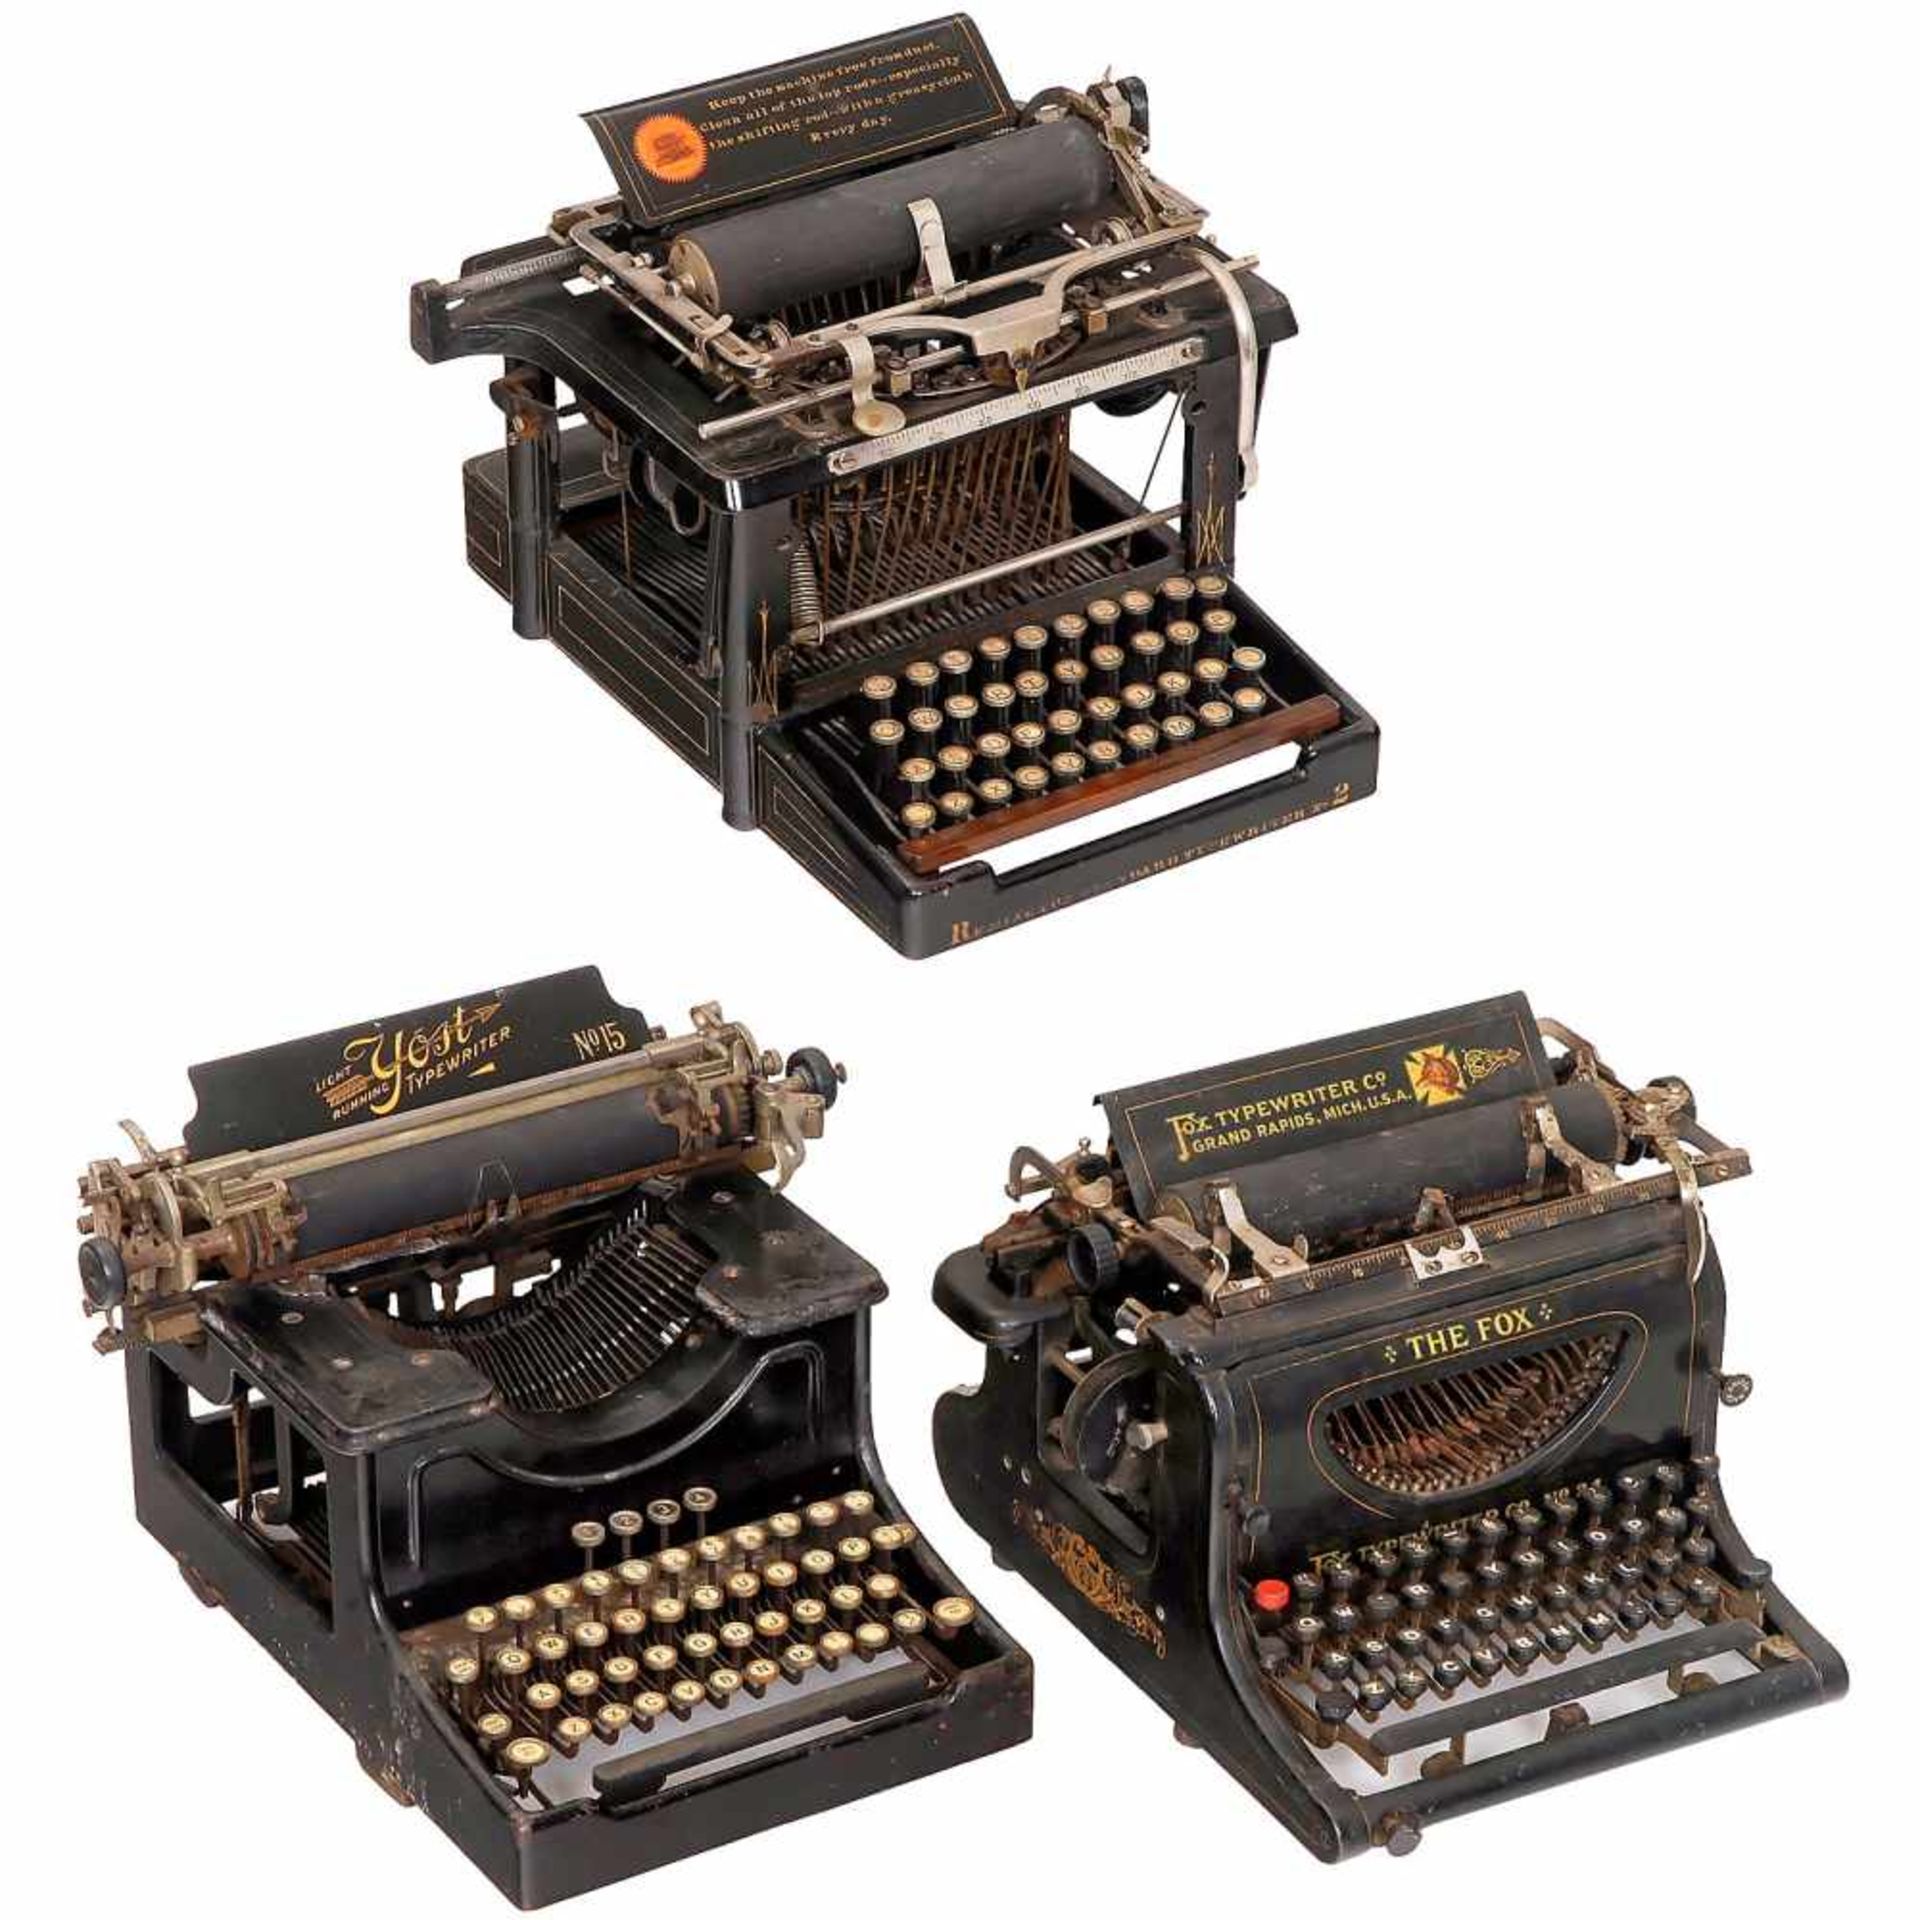 3 American Typewriters1) "Remington Standard No. 2", 1890. Early American upstroke machine,